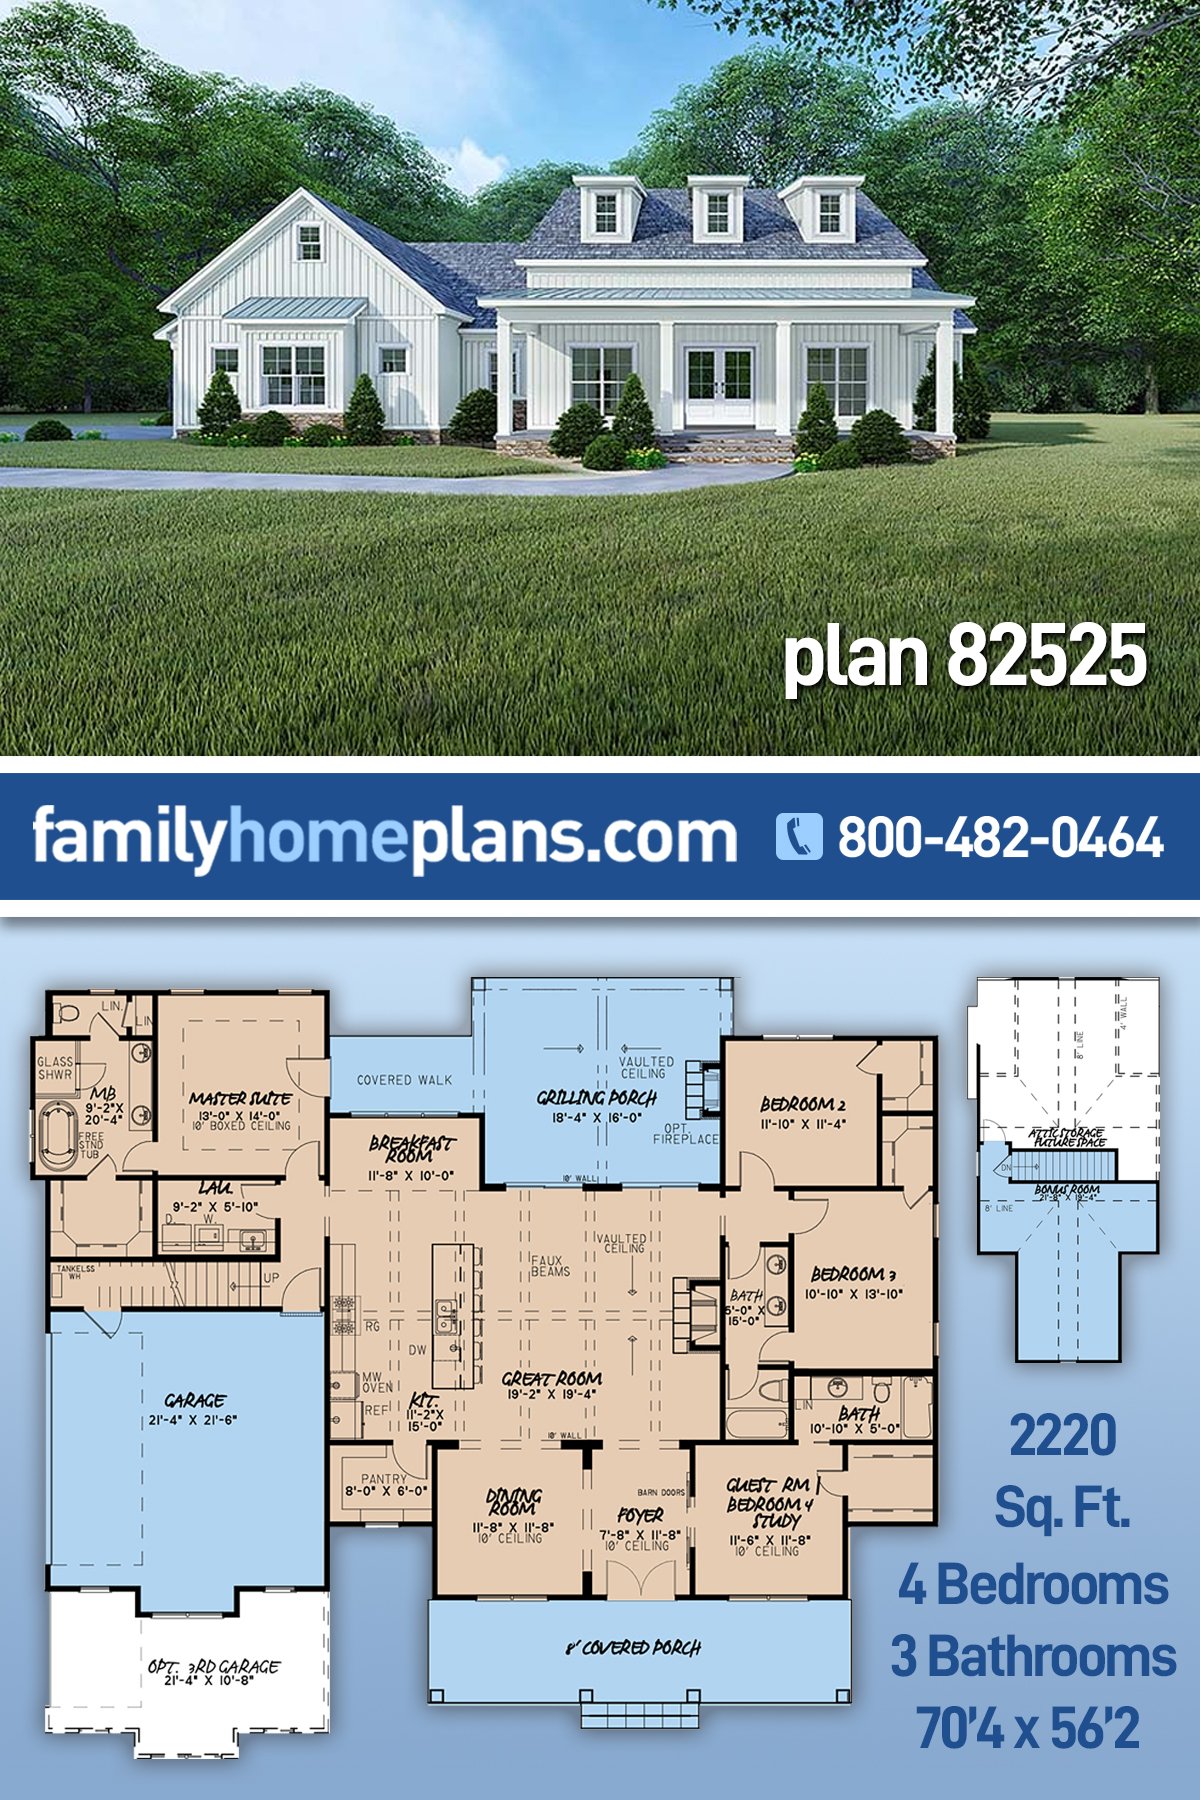 House Plan 82525